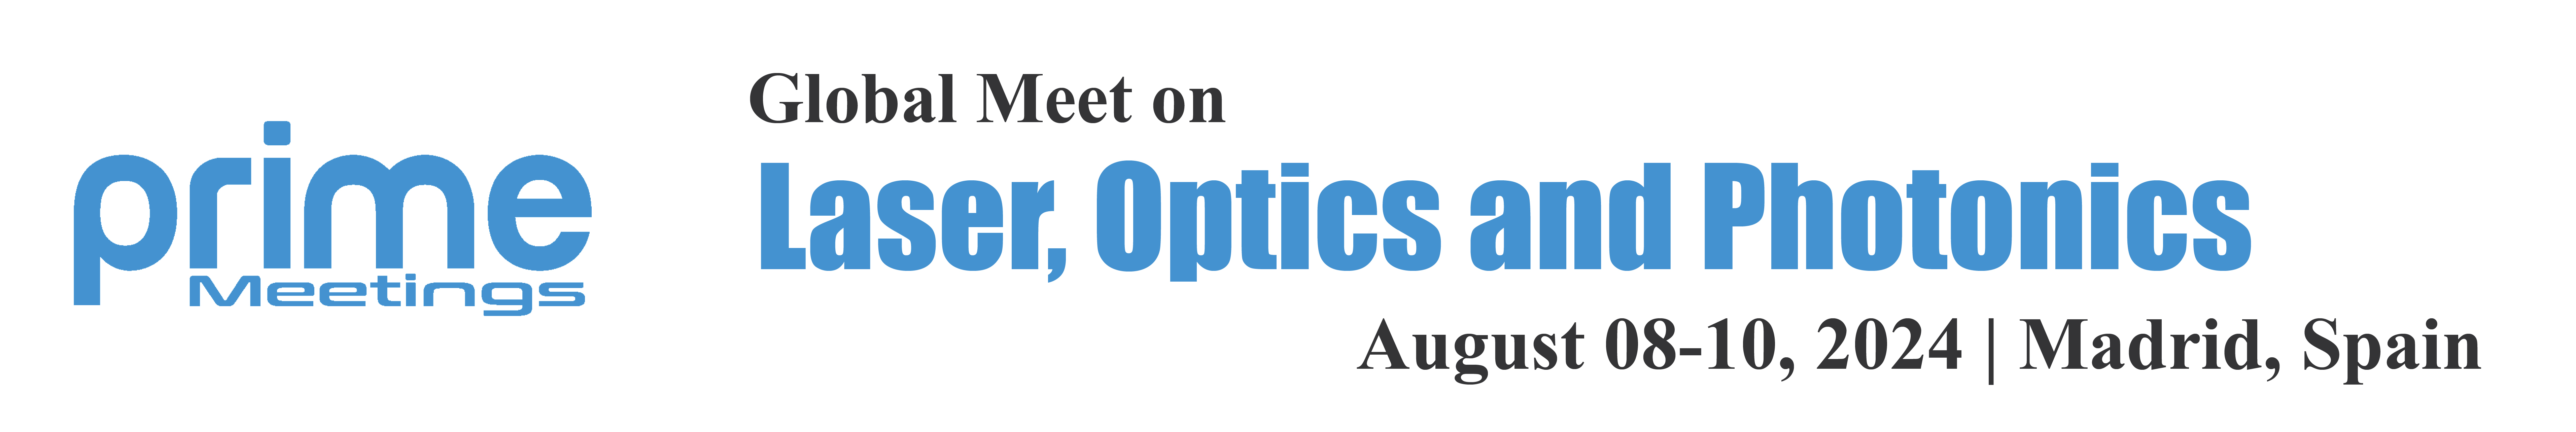 Global Meet on Laser, Optics and Photonics  